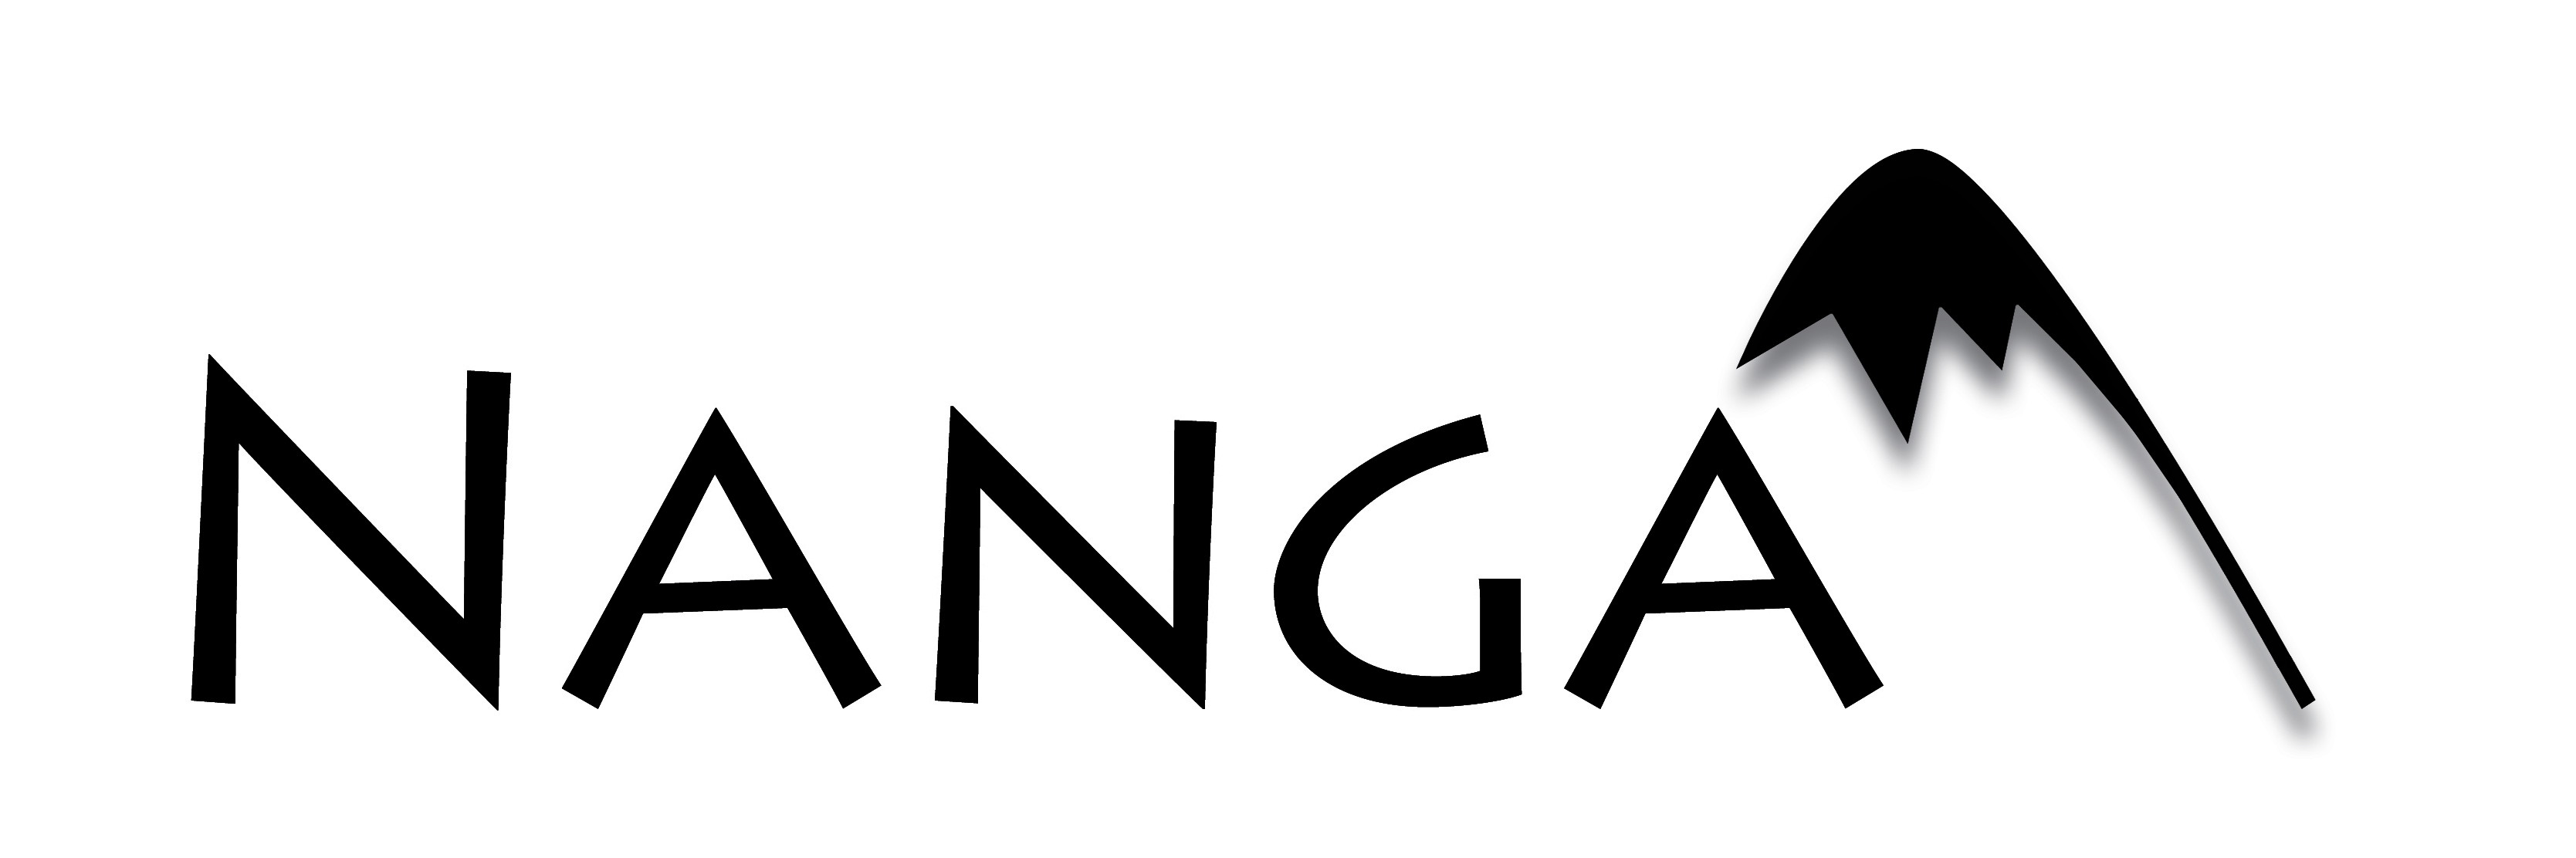 Nanga Logo black